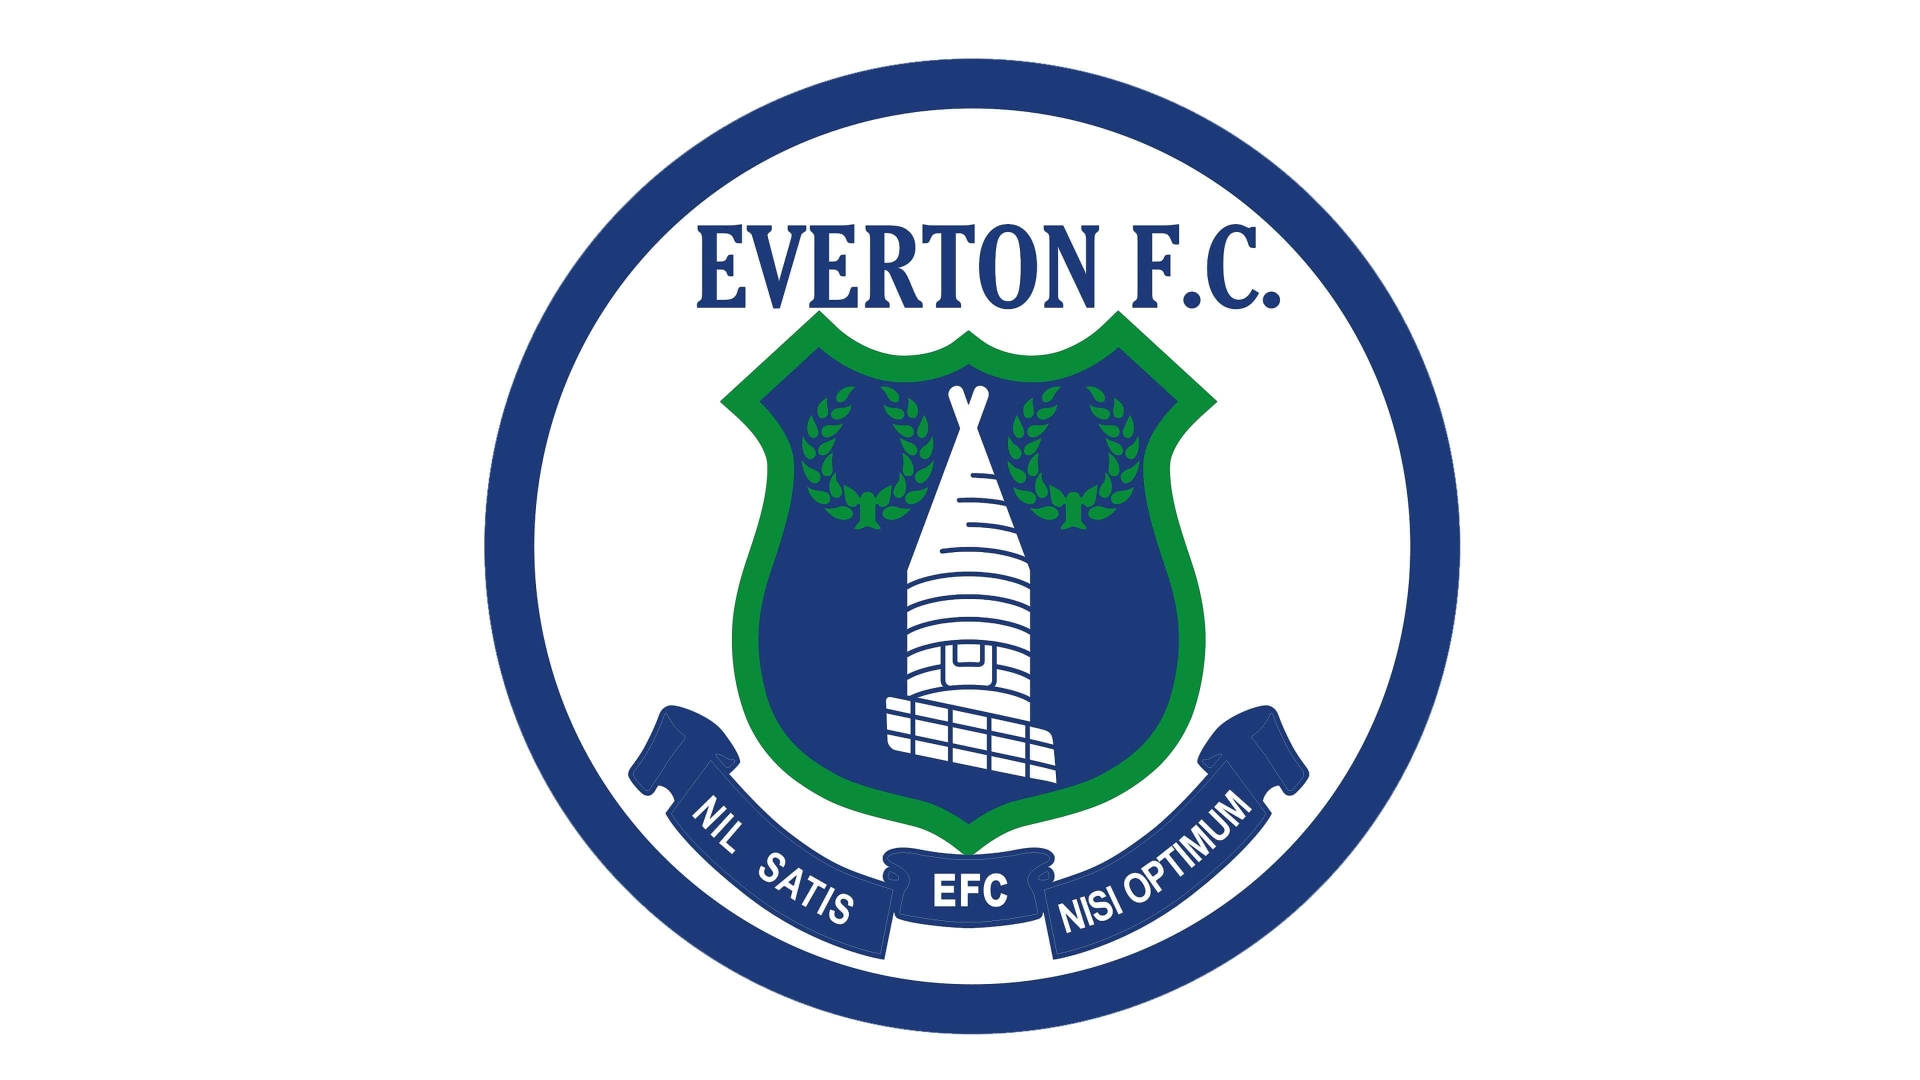 1978 Everton F.c. Emblem Background